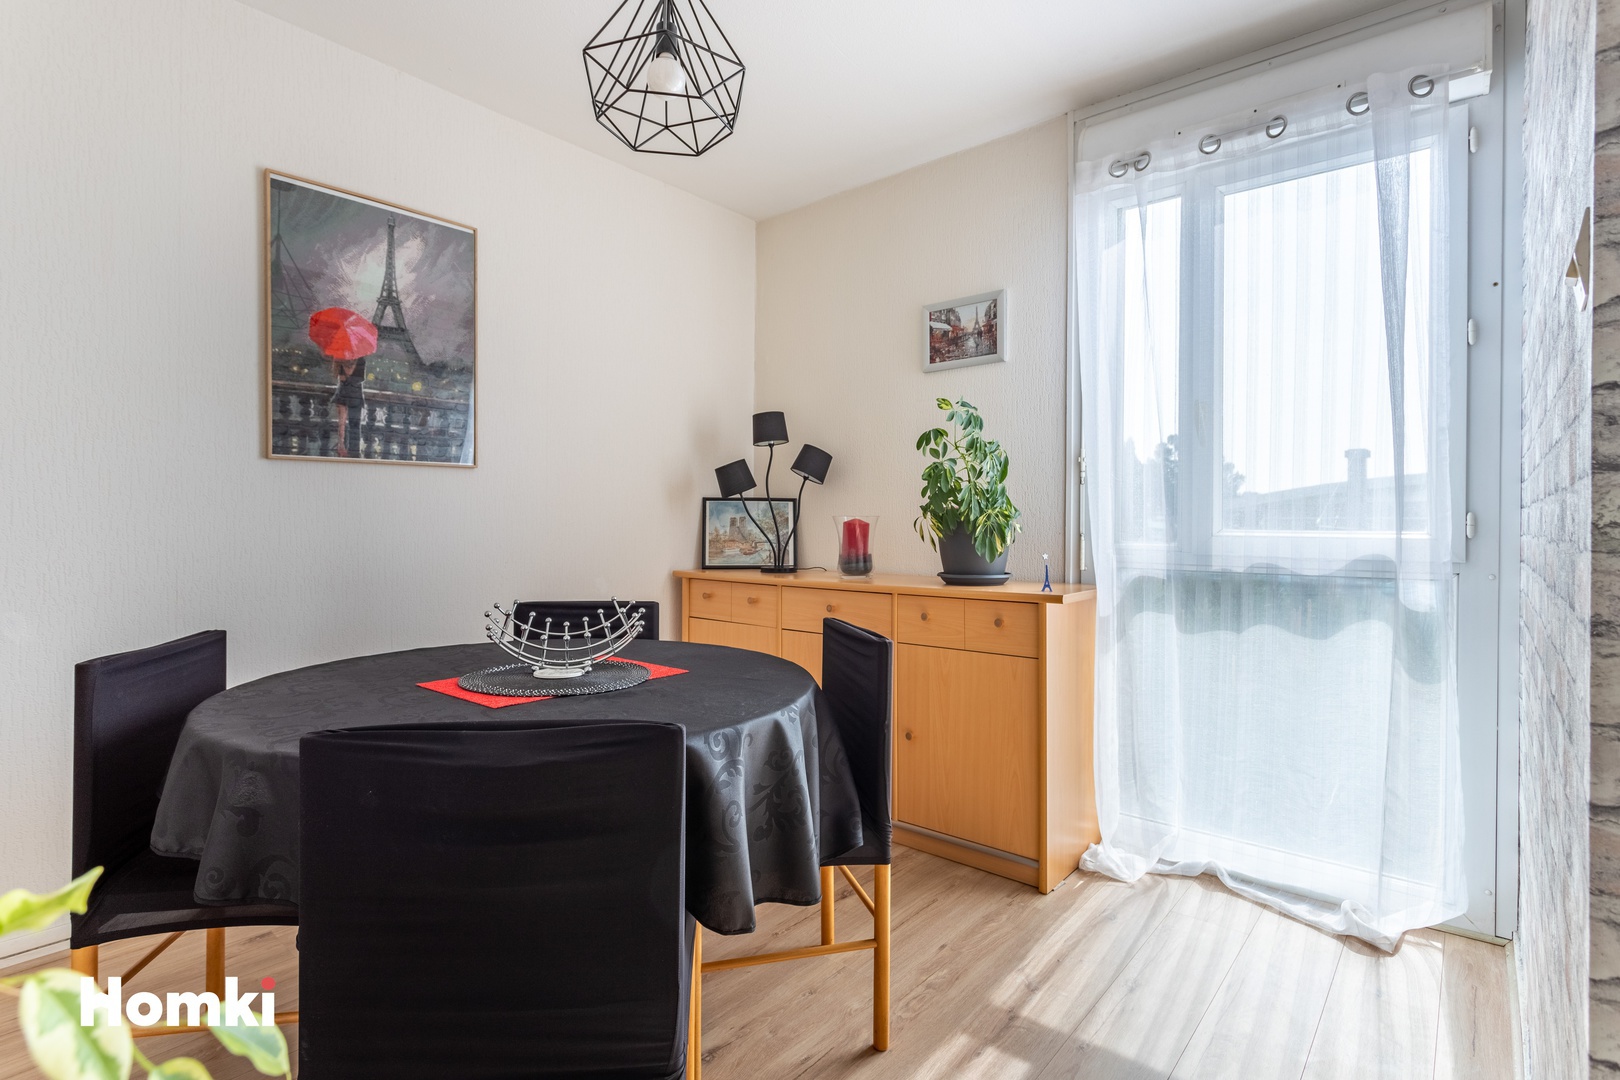 Homki - Vente Appartement  de 86.0 m² à Pessac 33600